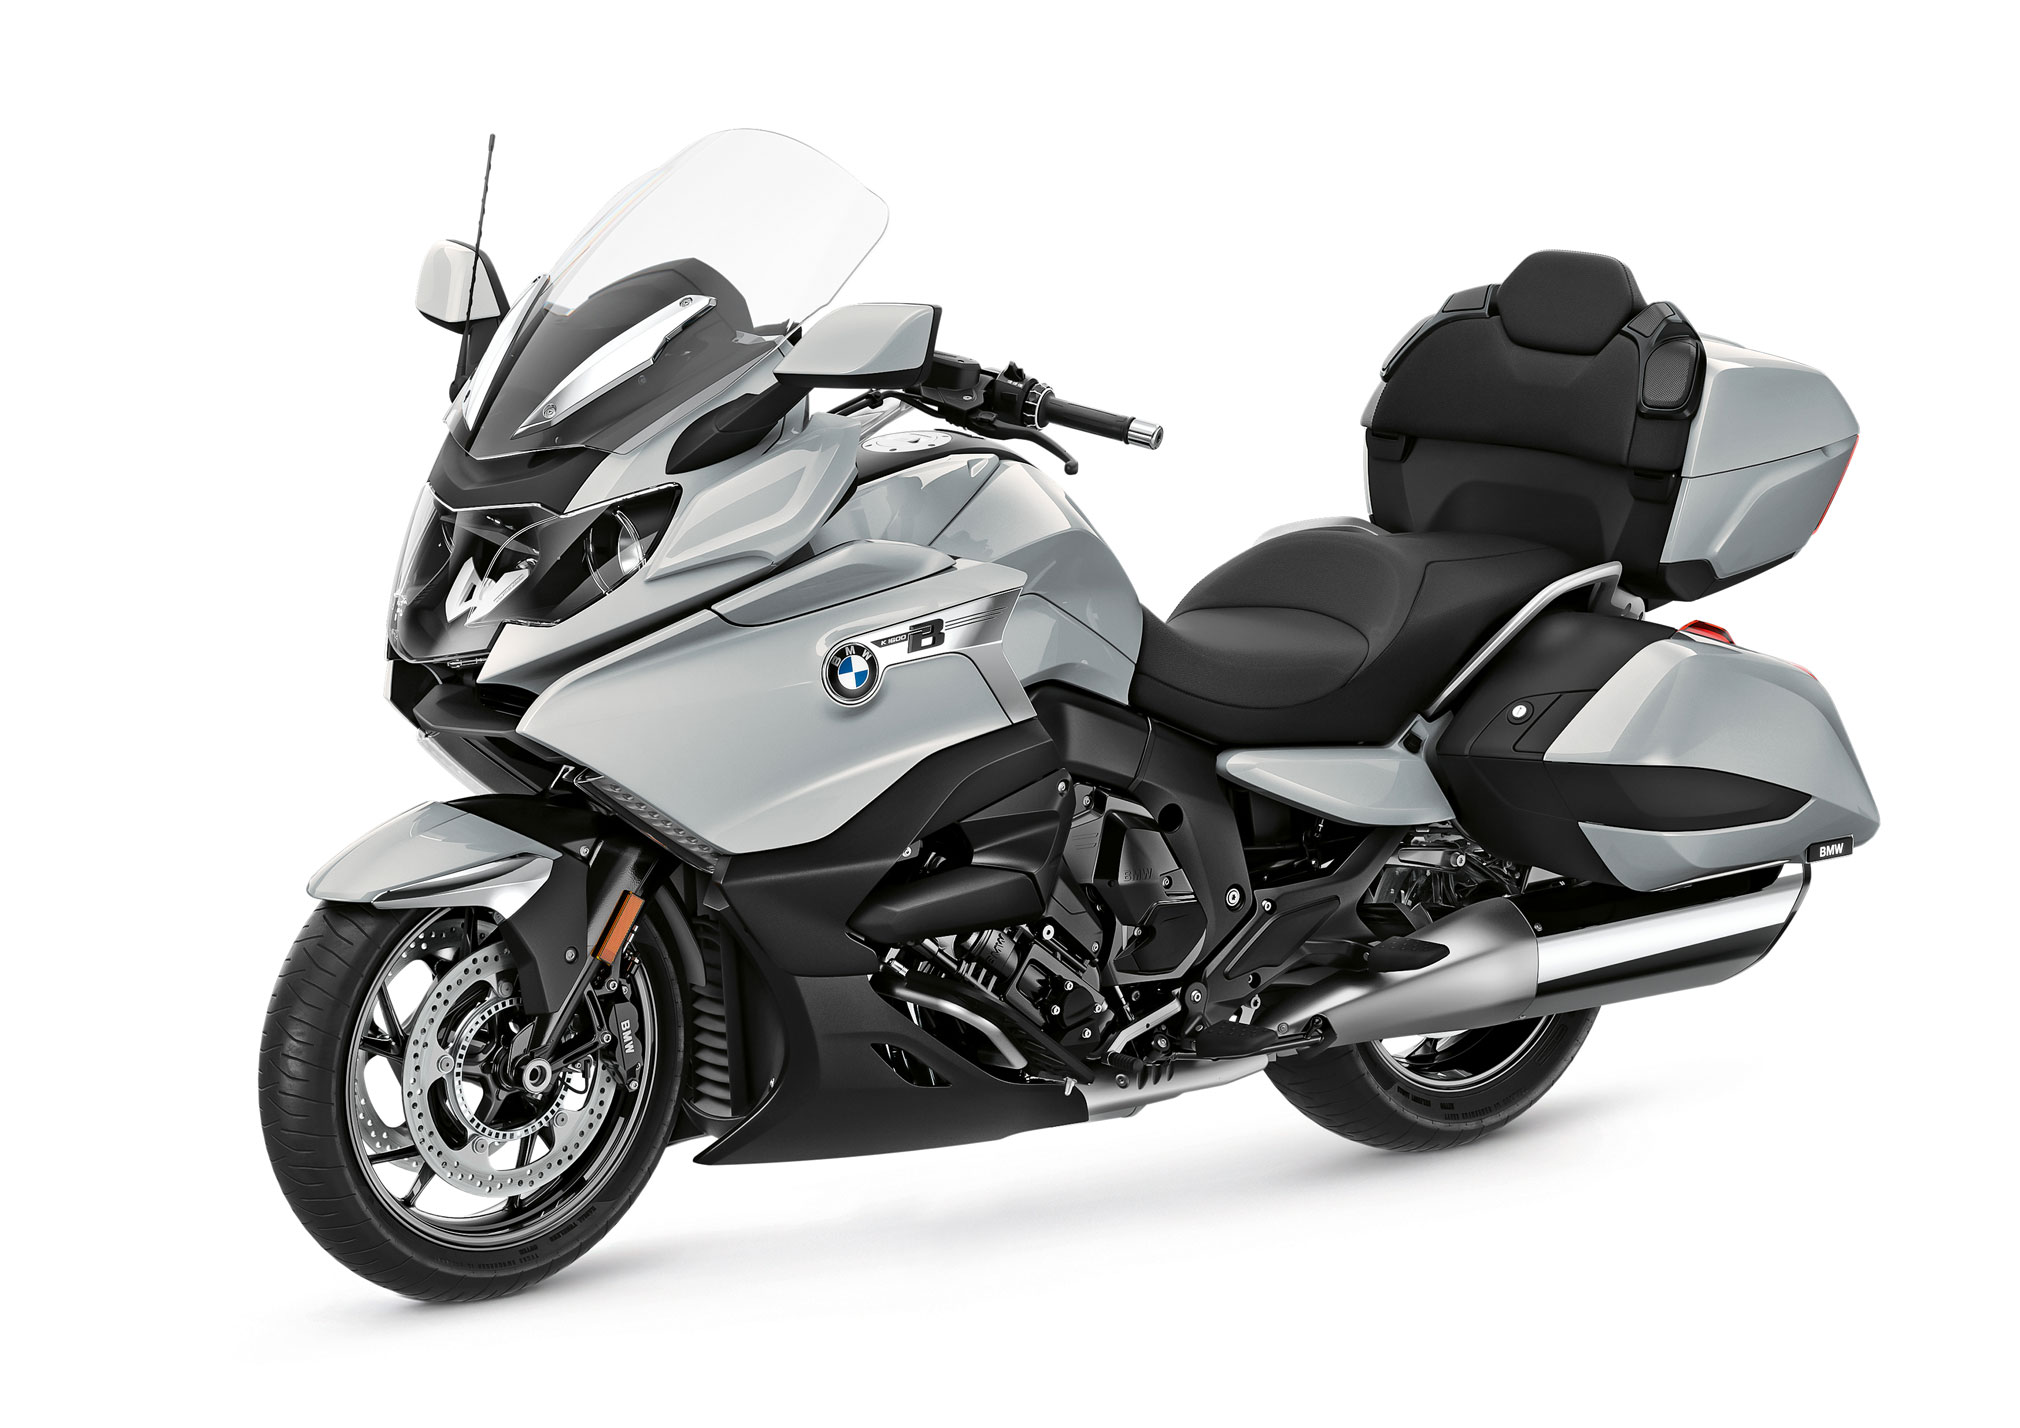 2020 BMW K1600 Grand America Guide • Total Motorcycle